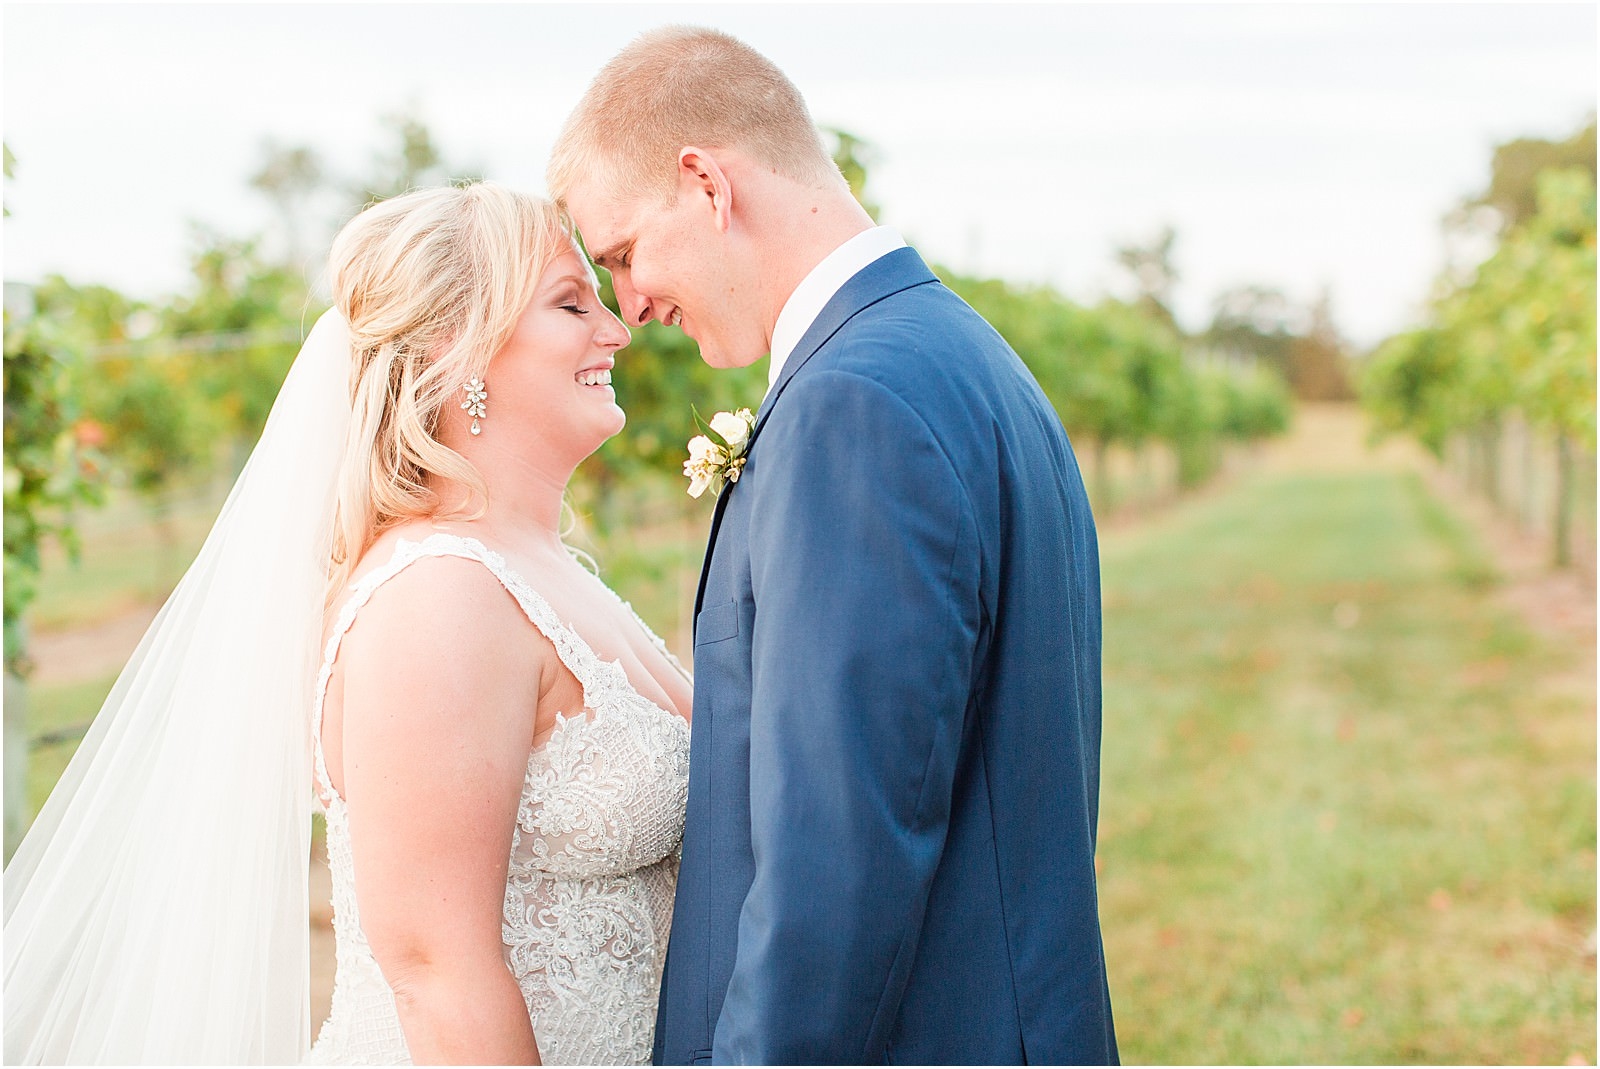 Kelsey and Caleb | Walkers Bluff Winery Wedding | Bret and Brandie Photography105.jpg